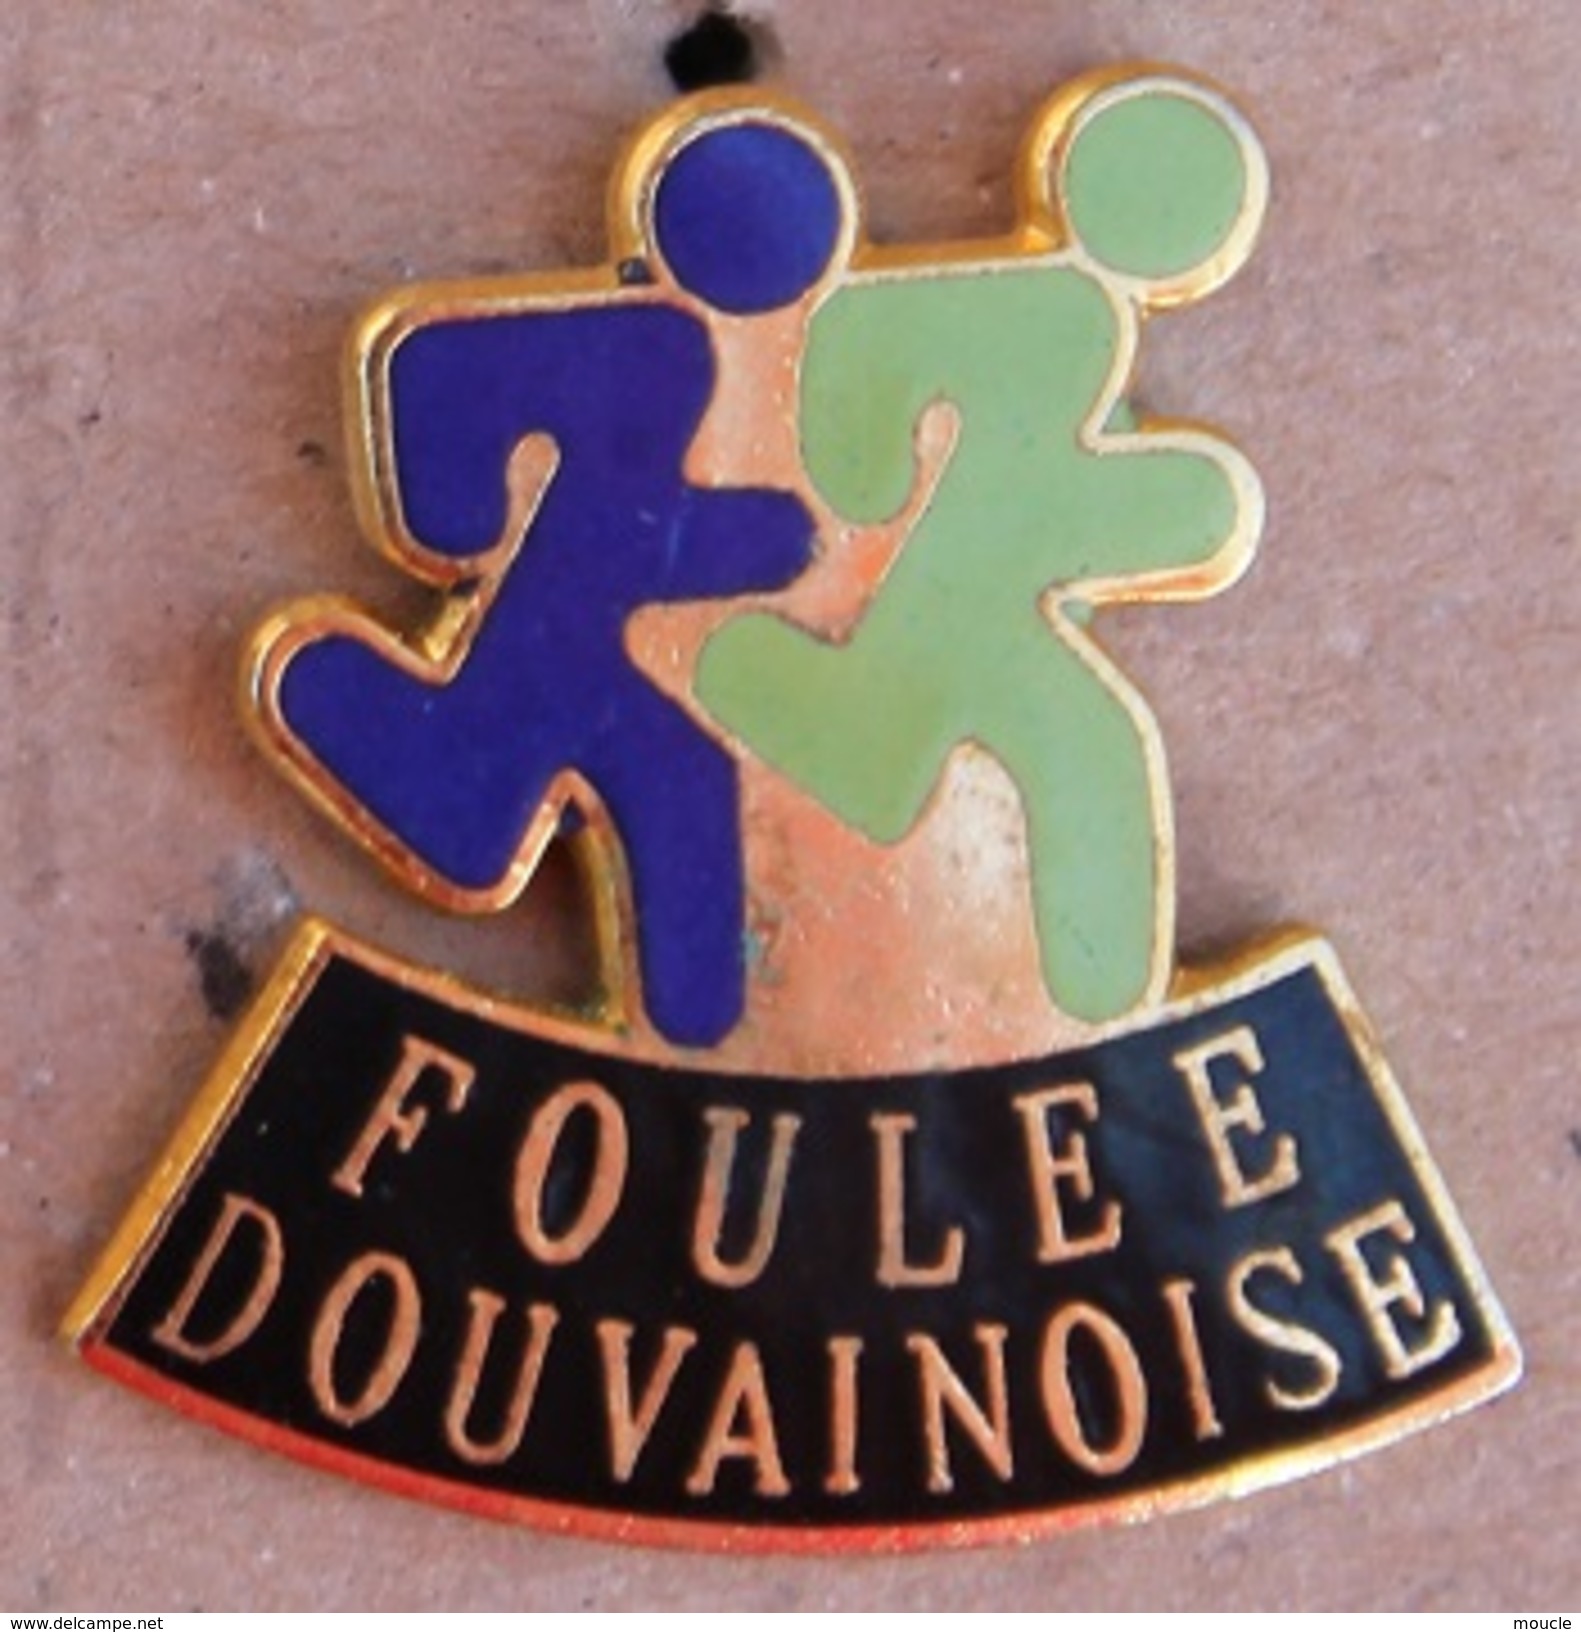 FOULEE DOUVAINOISE - DOUVAINE - COUREURS -    (17) - Atletiek